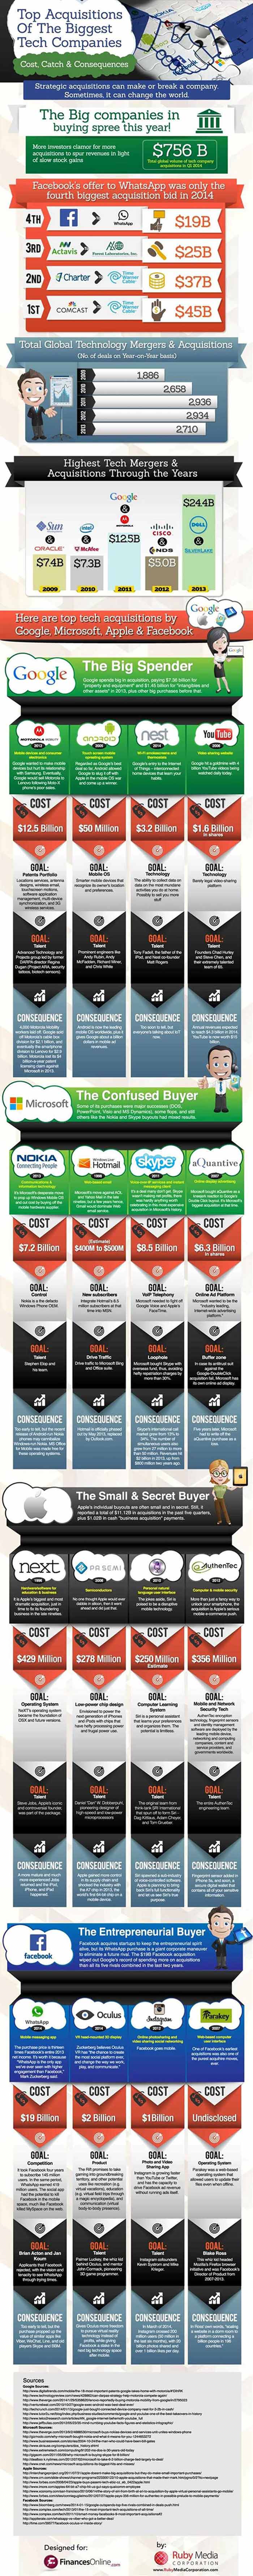 Infografia sobre las 4 compañias "mas gastonas" del panorama tecnologico